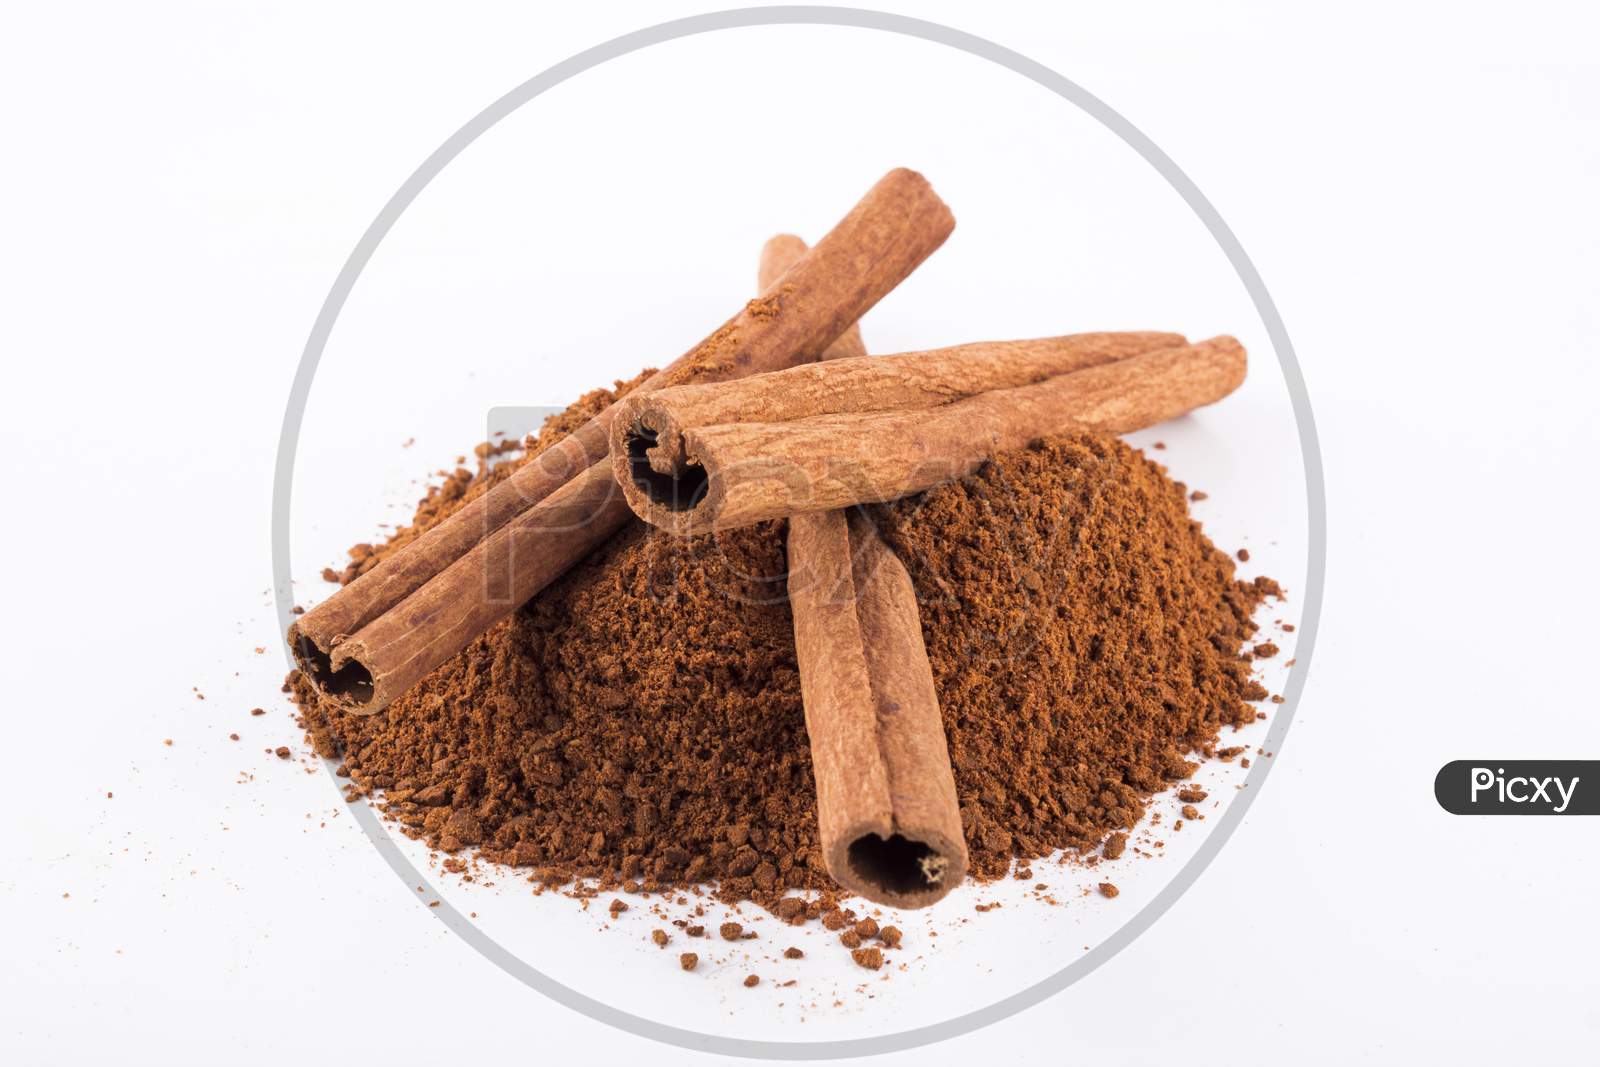 Cinnamon Sticks And Powder, White Background Stock Photo